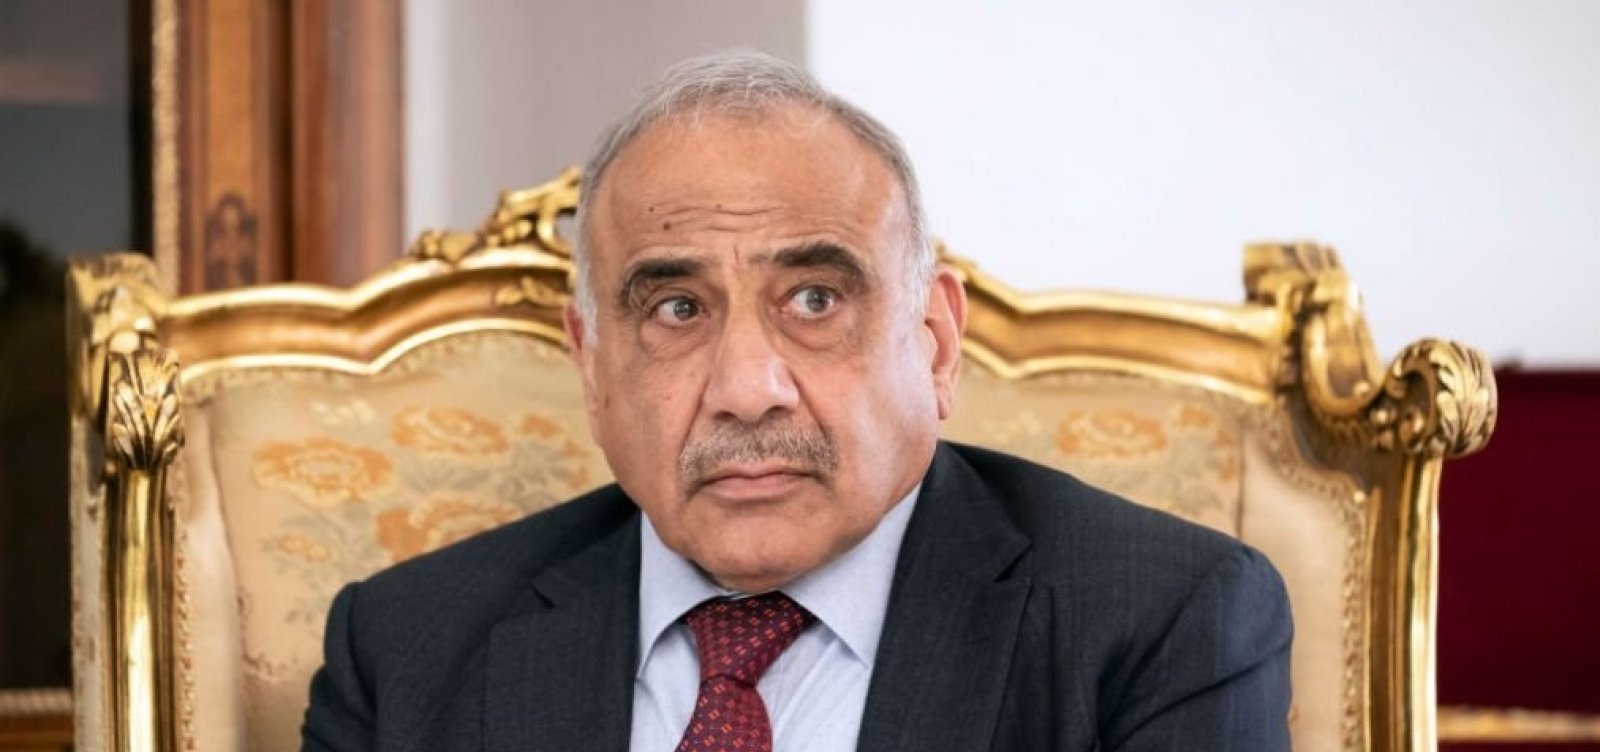 Parlamento do Iraque aceita pedido de renúncia do primeiro-ministro